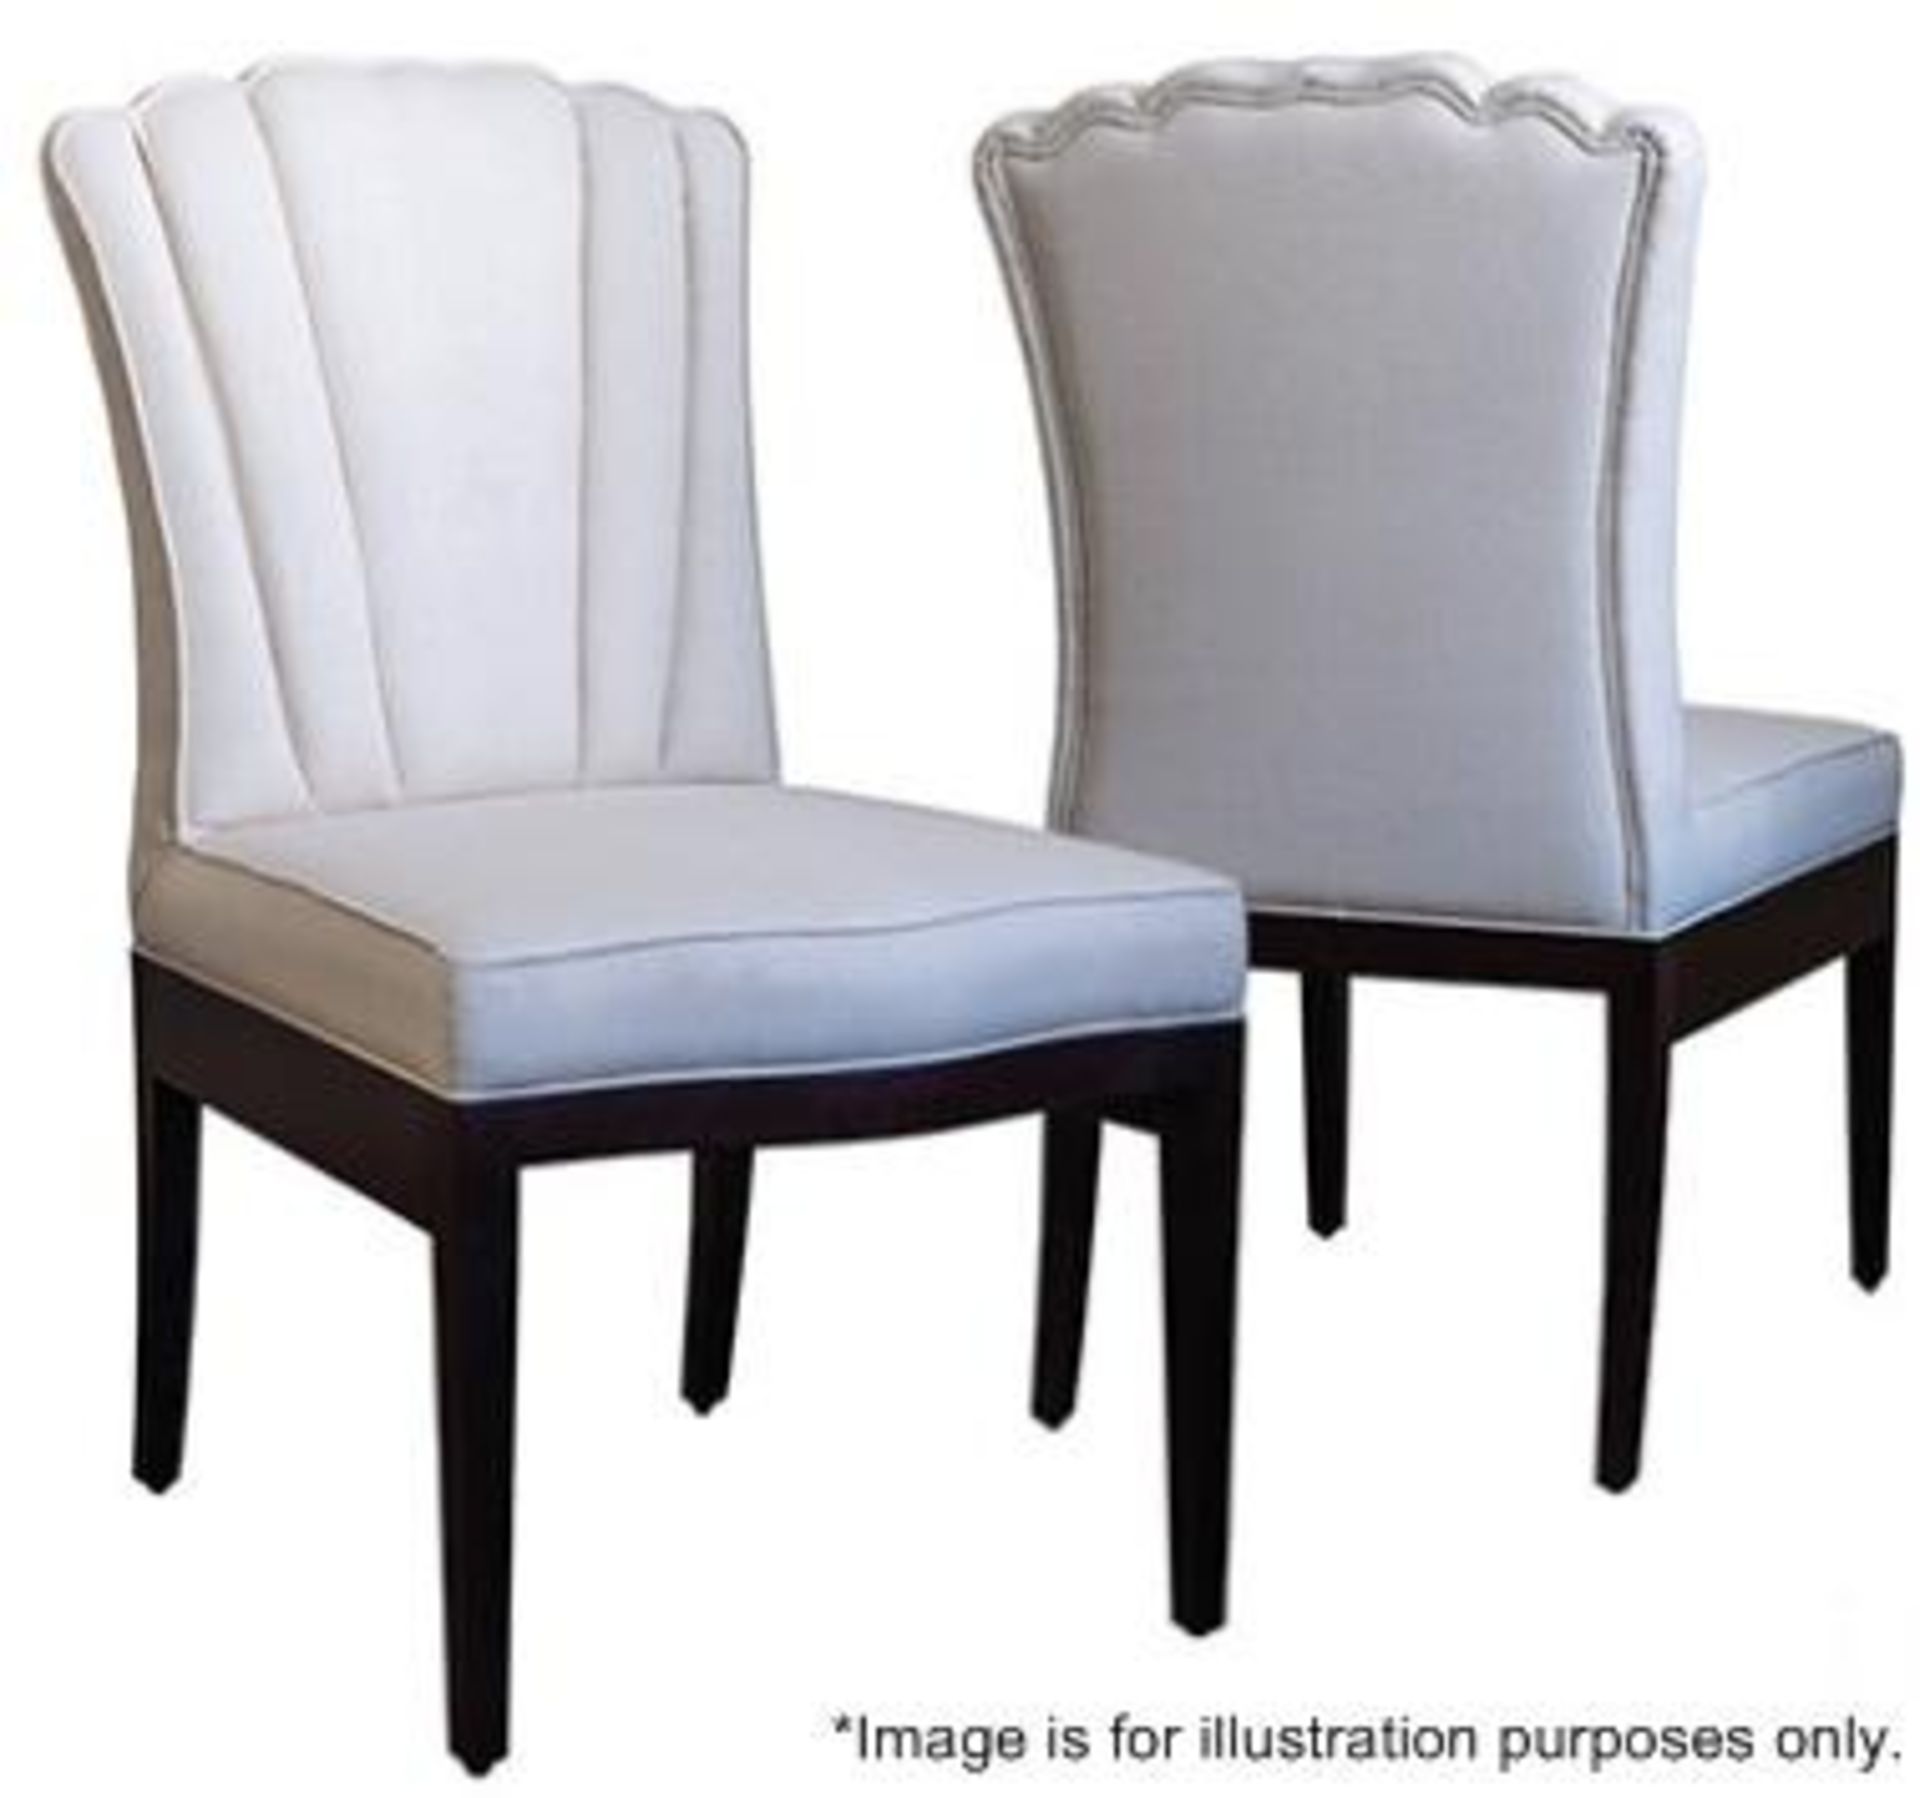 1 x JUSTIN VAN BREDA 'Charlotte' Fabric Upholstered Chair With Dark Grey Oak Frame - Original Price